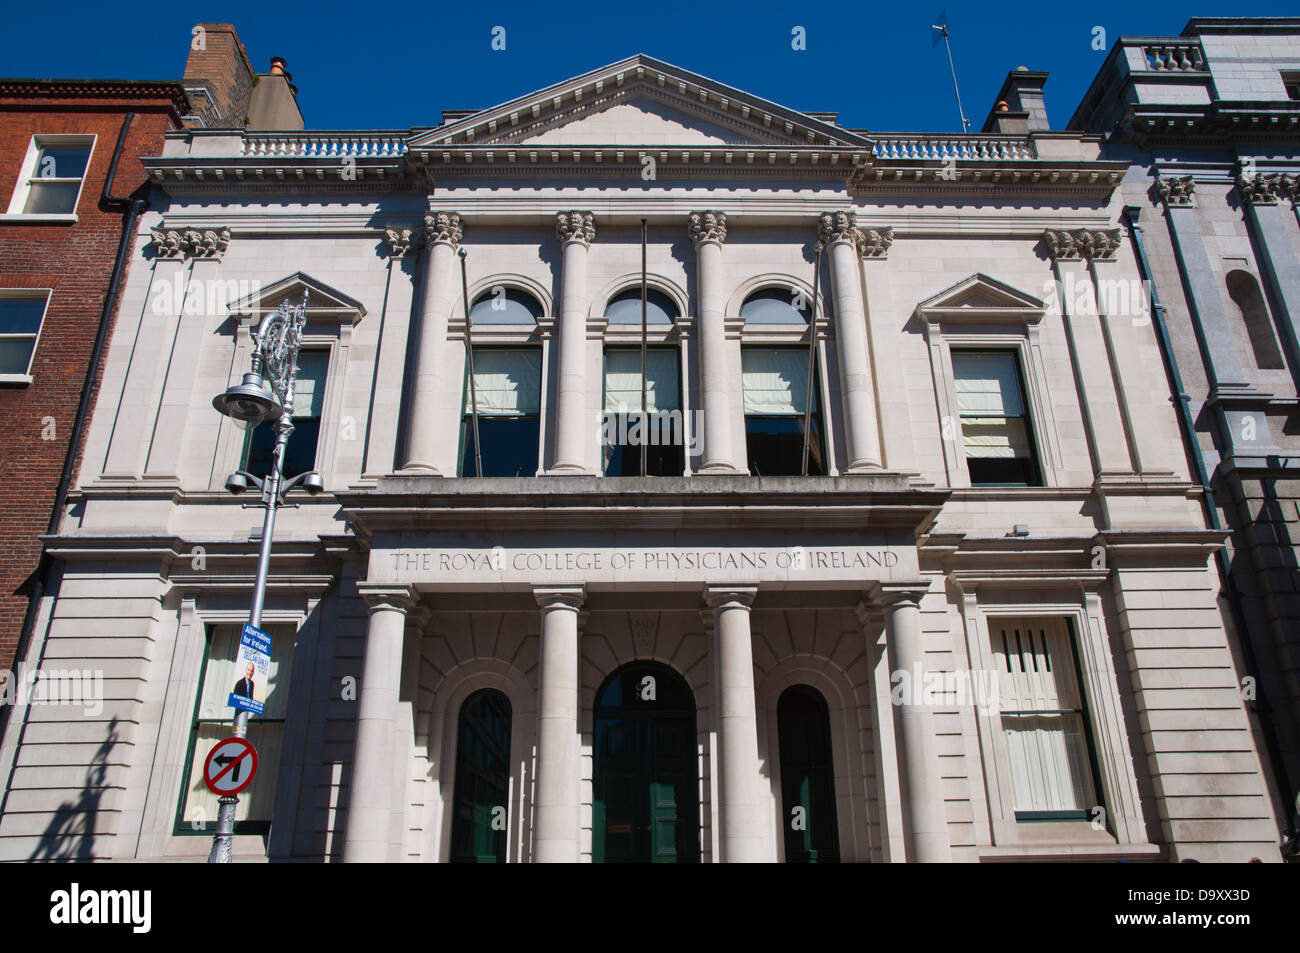 Das Royal College of Physicians of Ireland Gebäude Kildare Street Dublin Irland Mitteleuropa Stockfoto